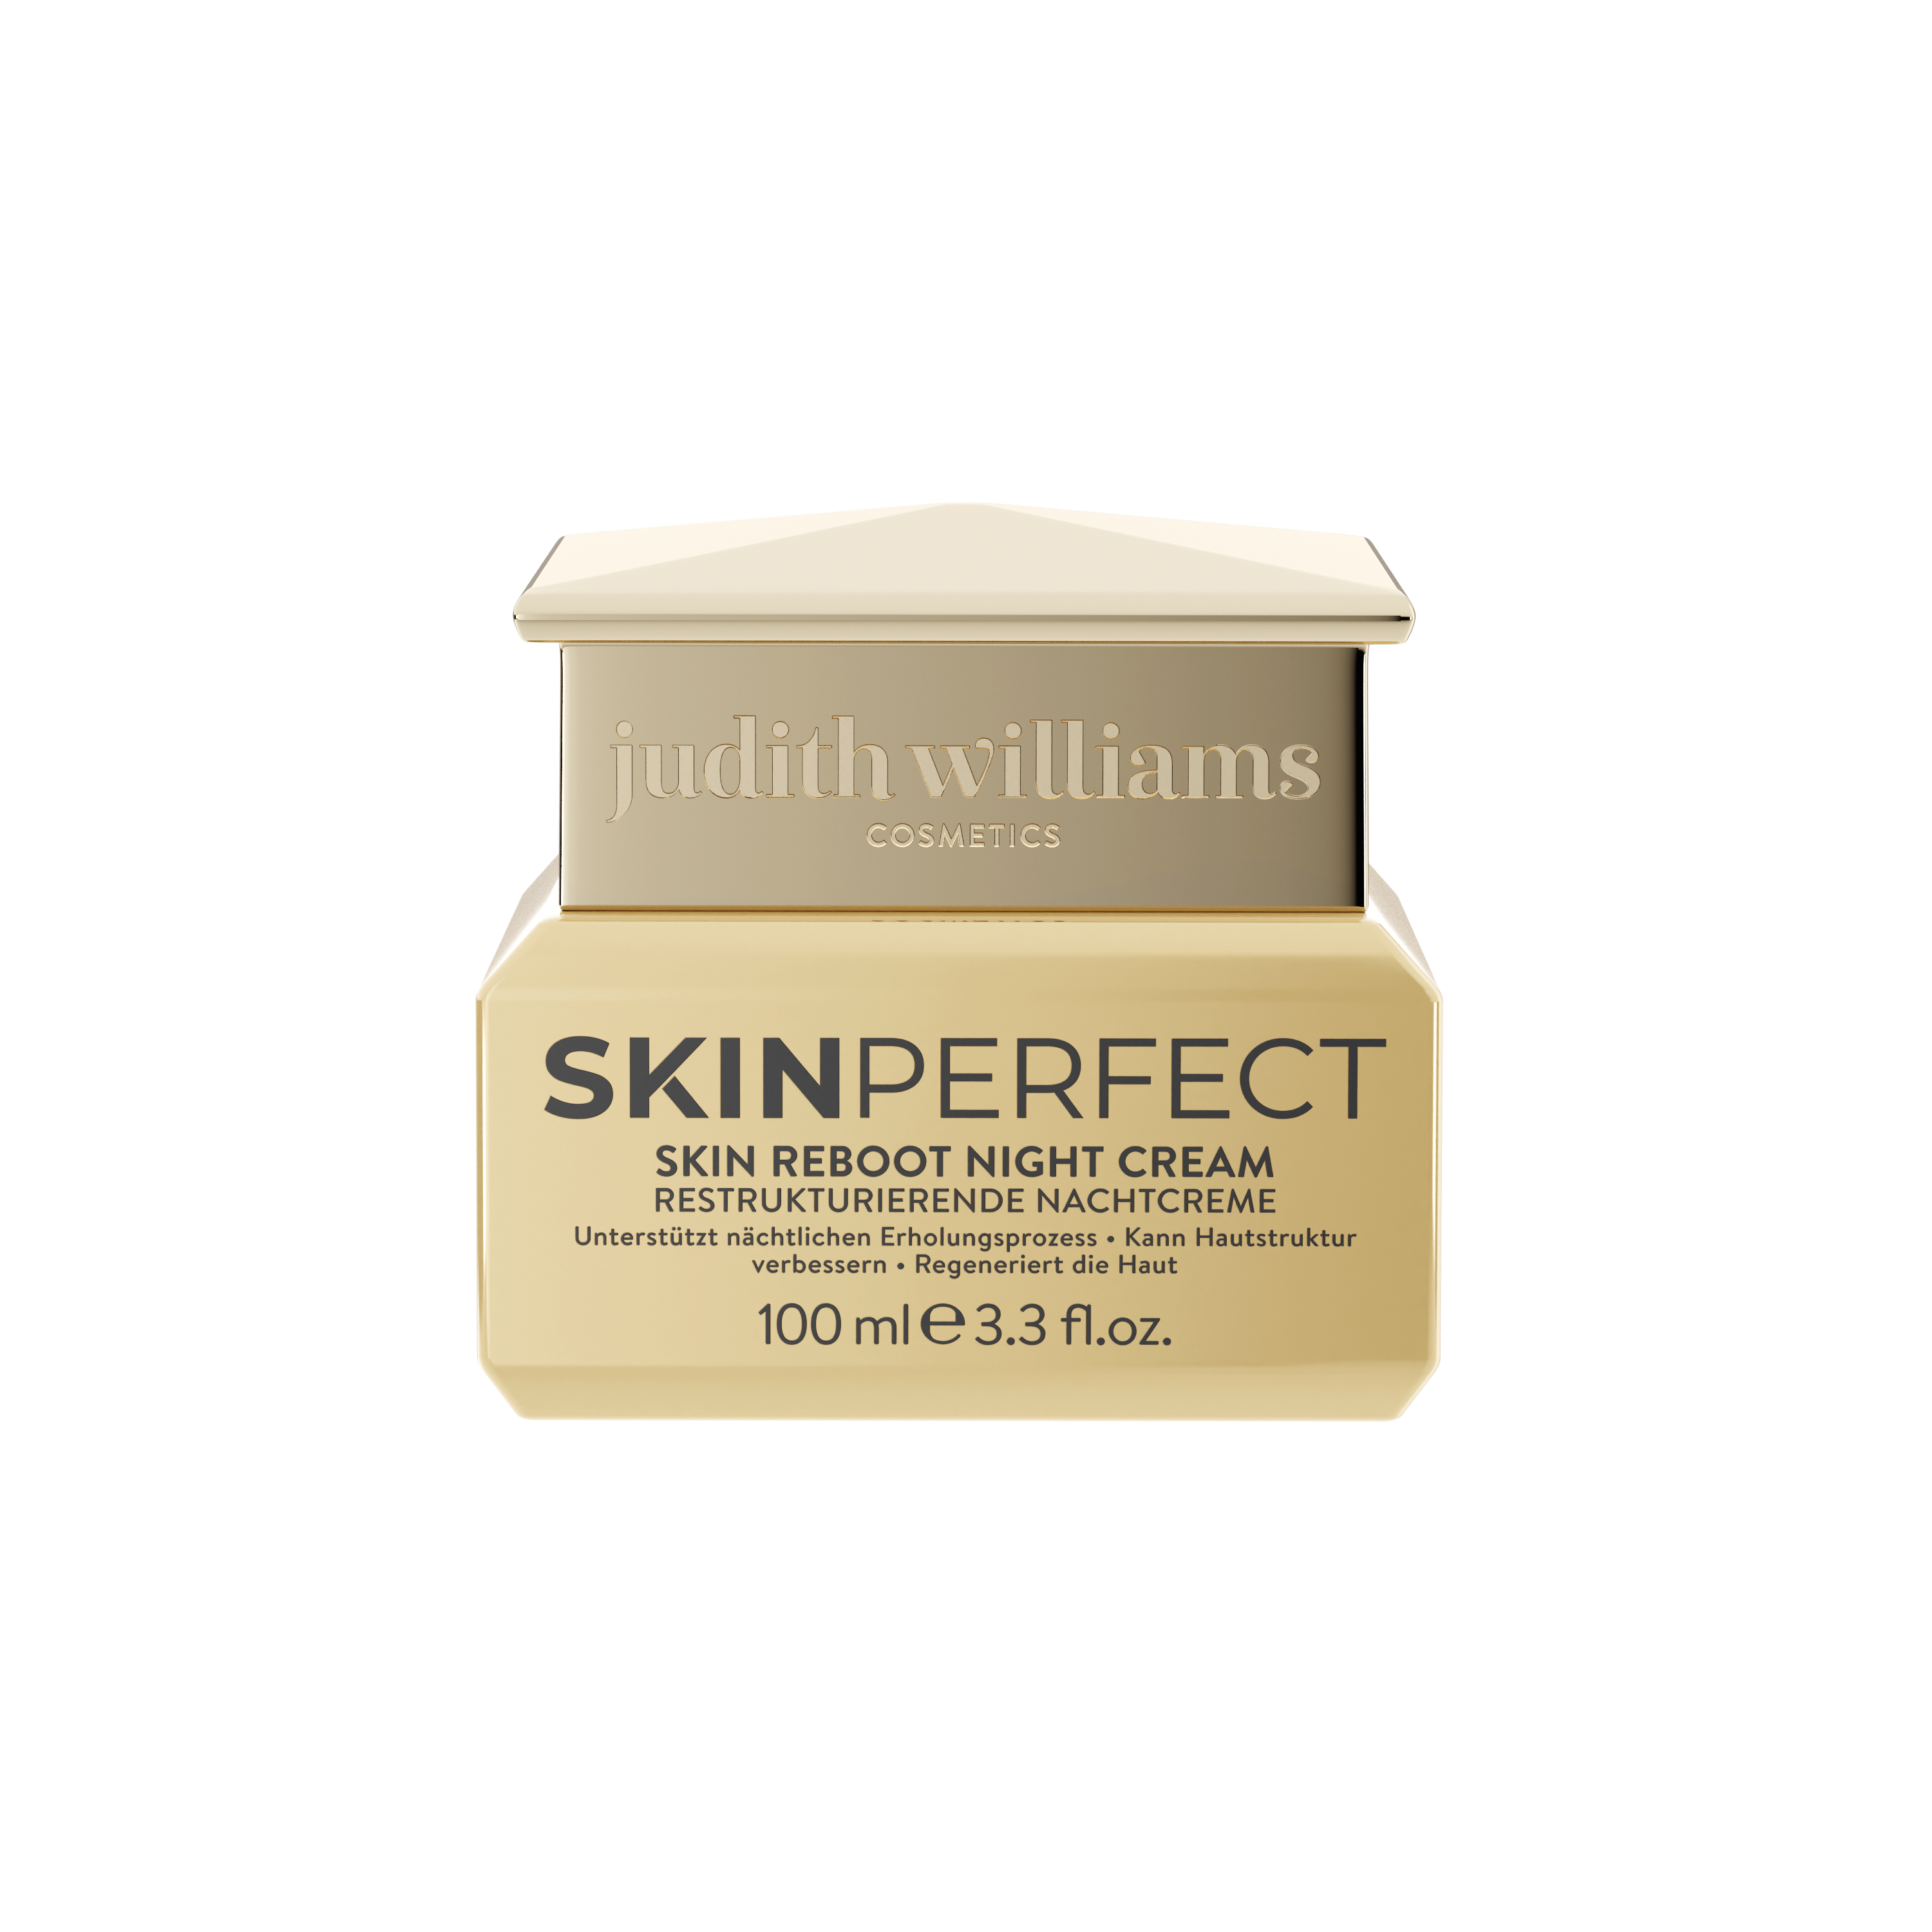 Nachtcreme | SkinPerfect | Skin Reboot Night Cream | Judith Williams